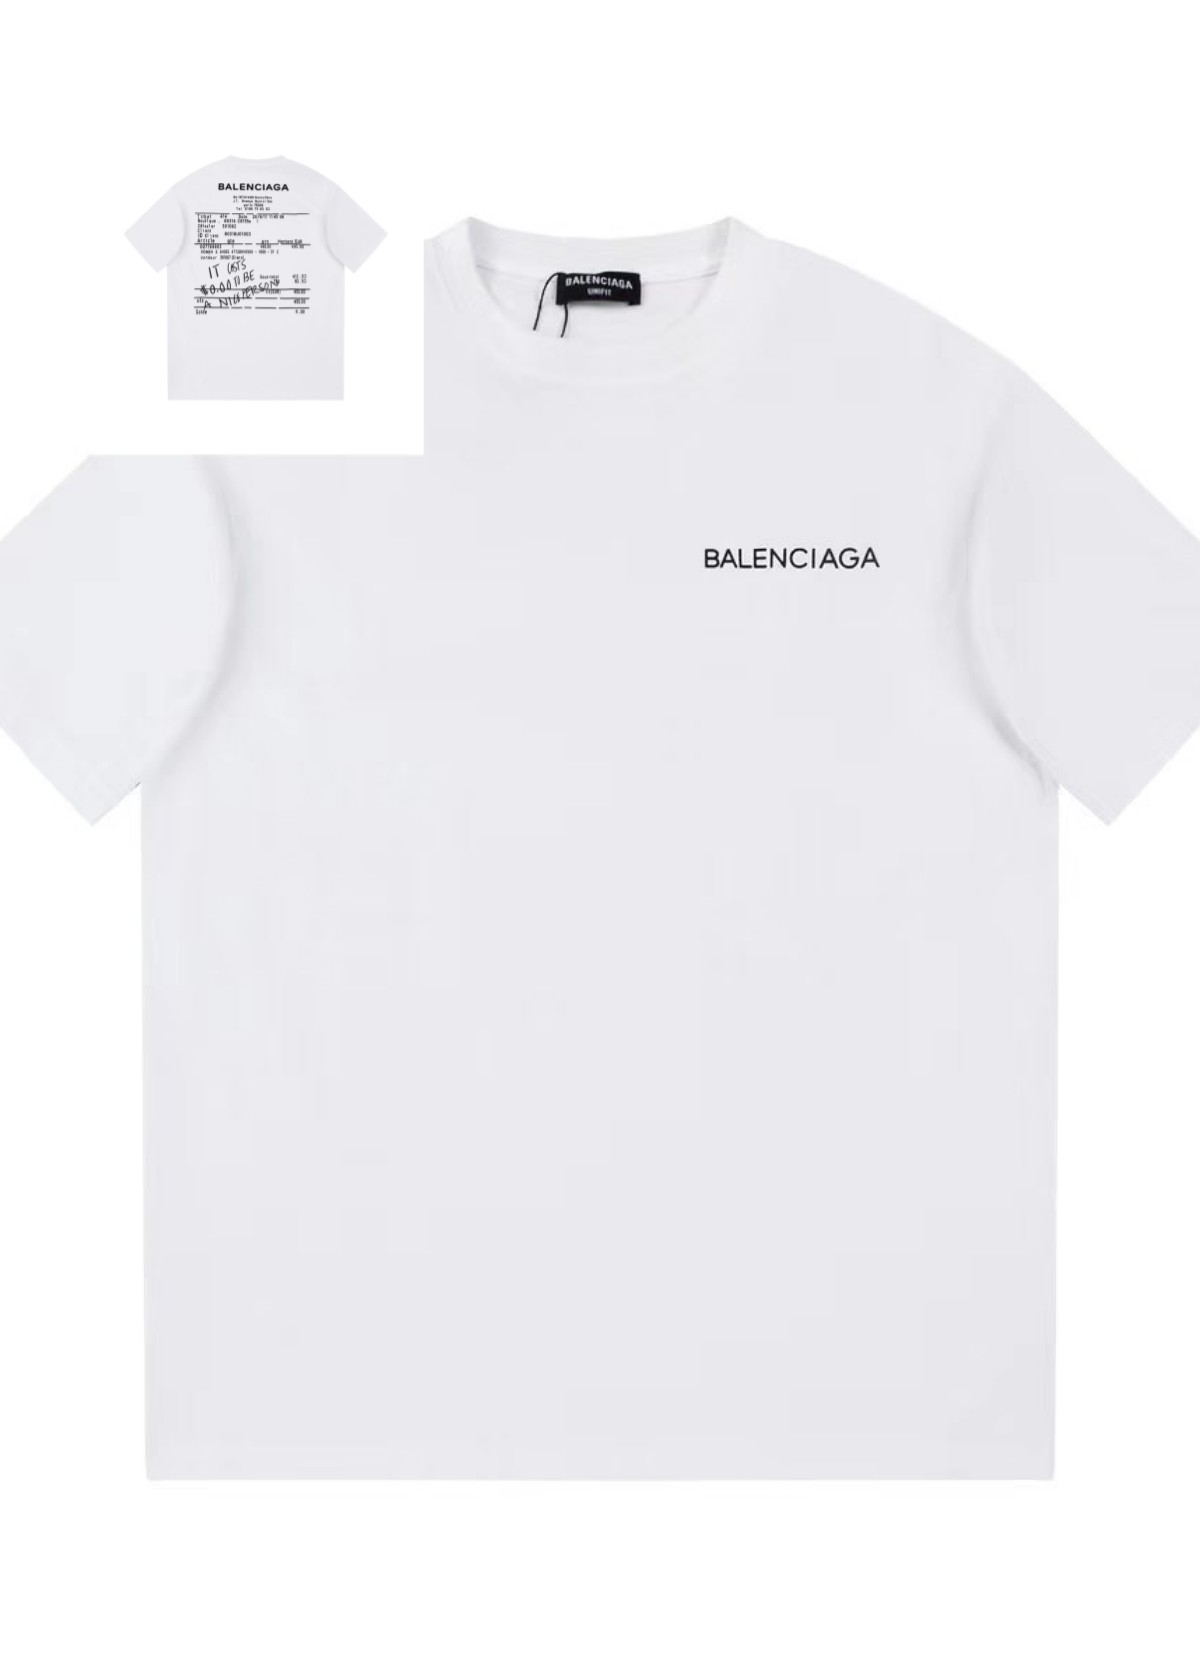 Balenciaga Clothing T-Shirt Black White Printing Cotton Spring/Summer Collection Short Sleeve